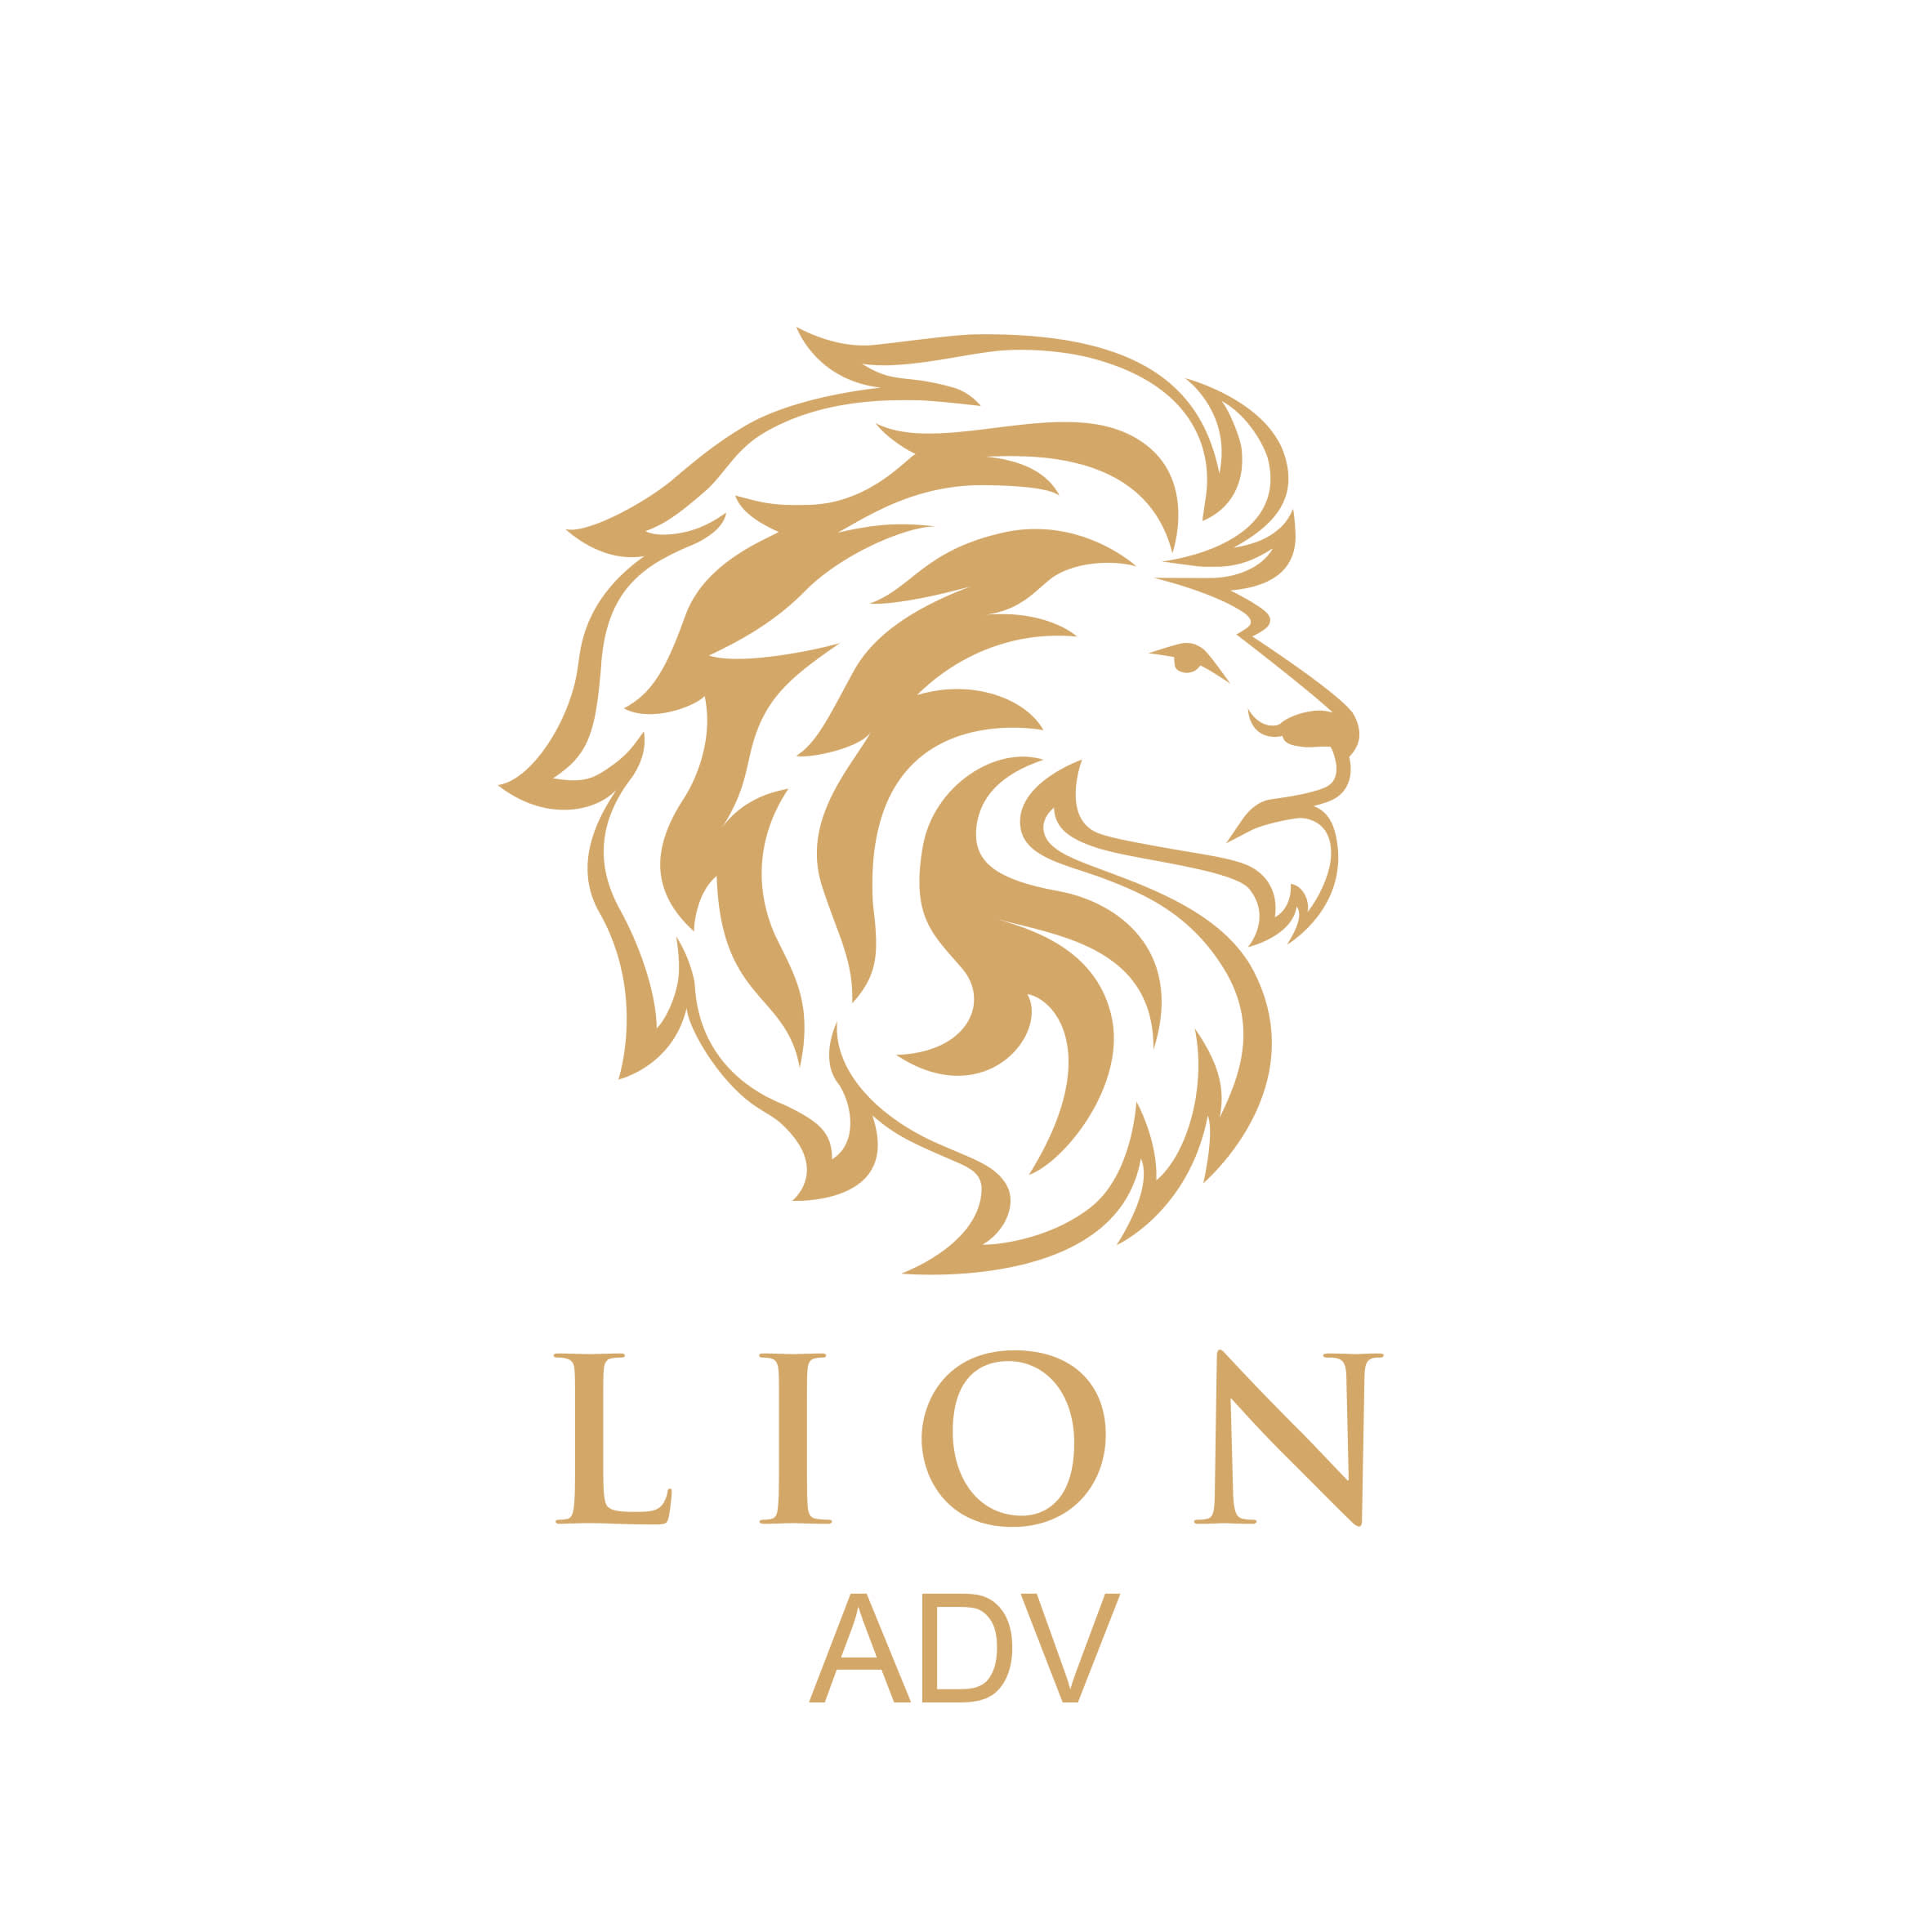 Lion Adv.jpeg